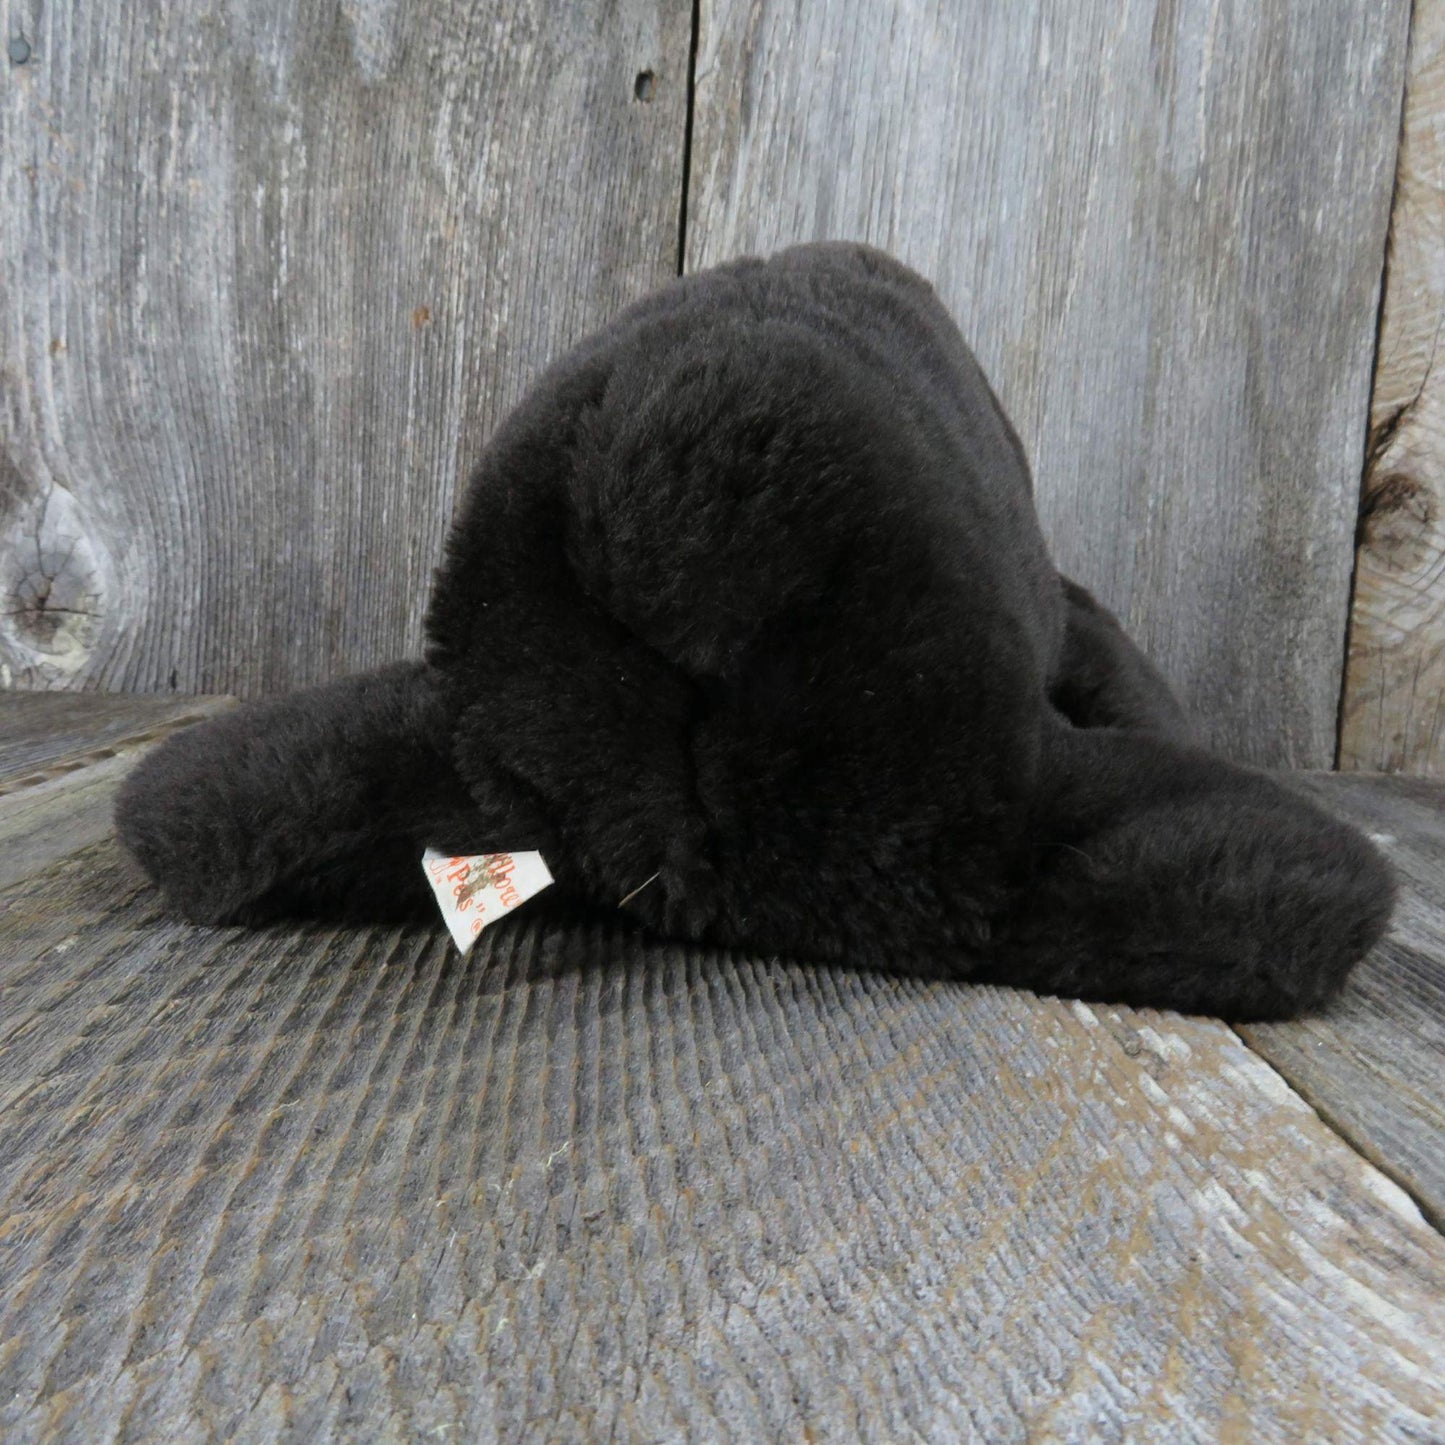 Vintage Black Bear Stuffed Animal Dakin Pillow Pets 1982 8 Inch Plush Clippings Pellet